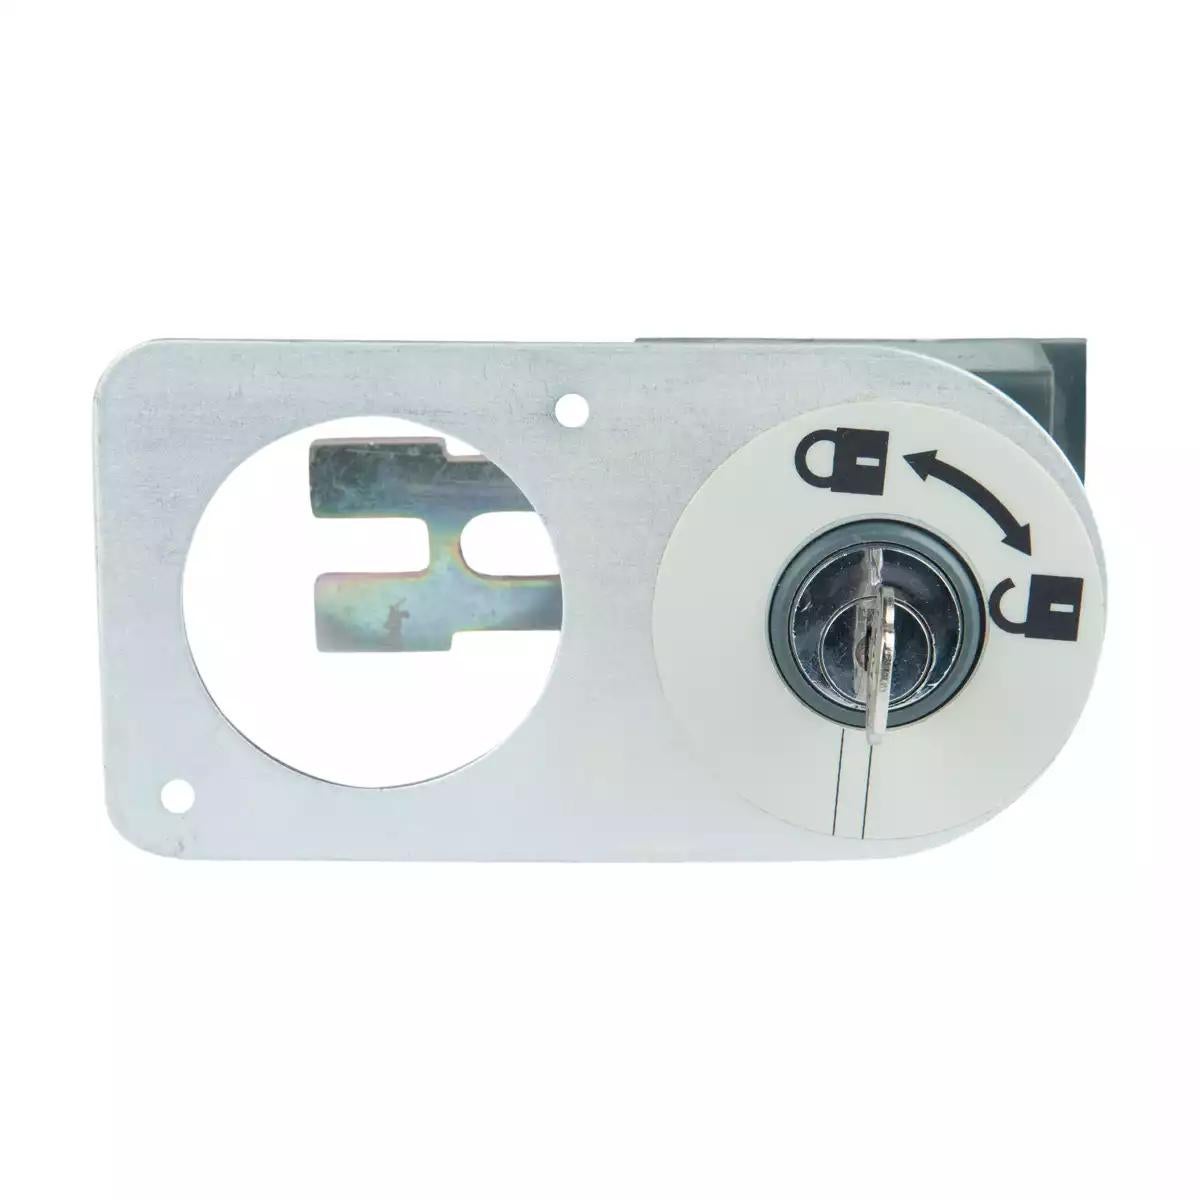 Changeover Switch Castell Lock Type1 Frame3,4 & 5 Frame6